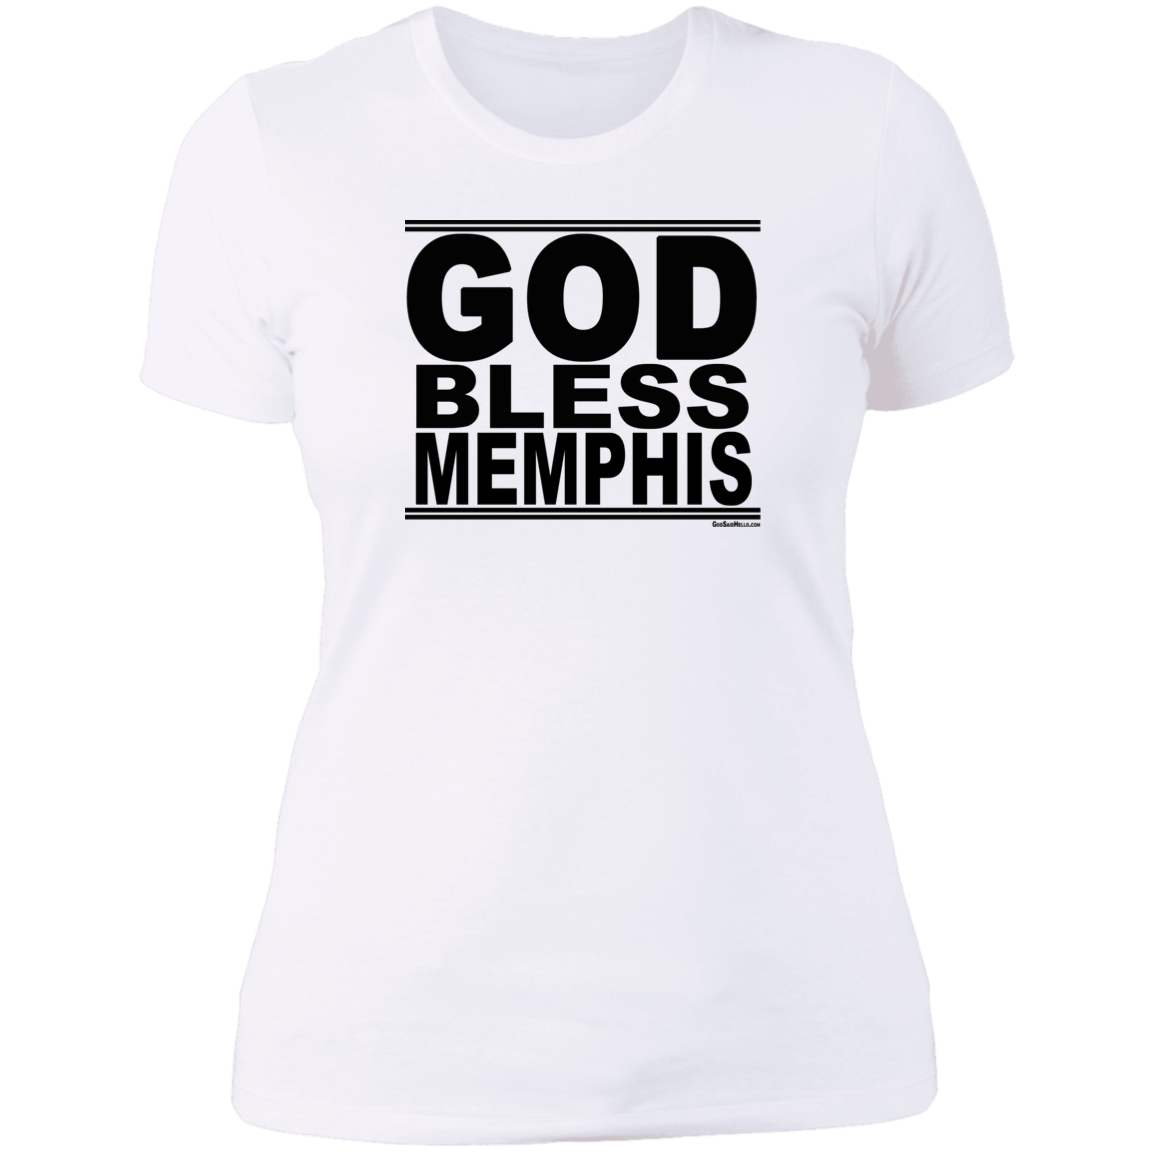 #GodBlessMemphis - Women's Shortsleeve Tee